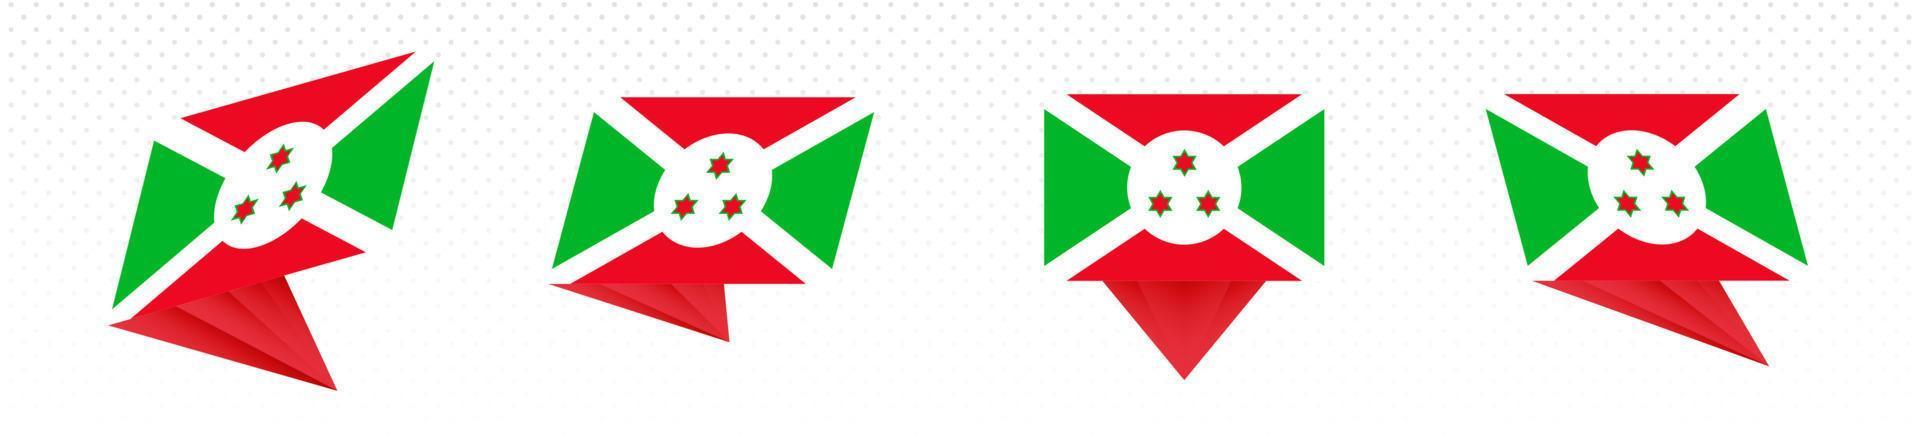 Flag of Burundi in modern abstract design, flag set. vector